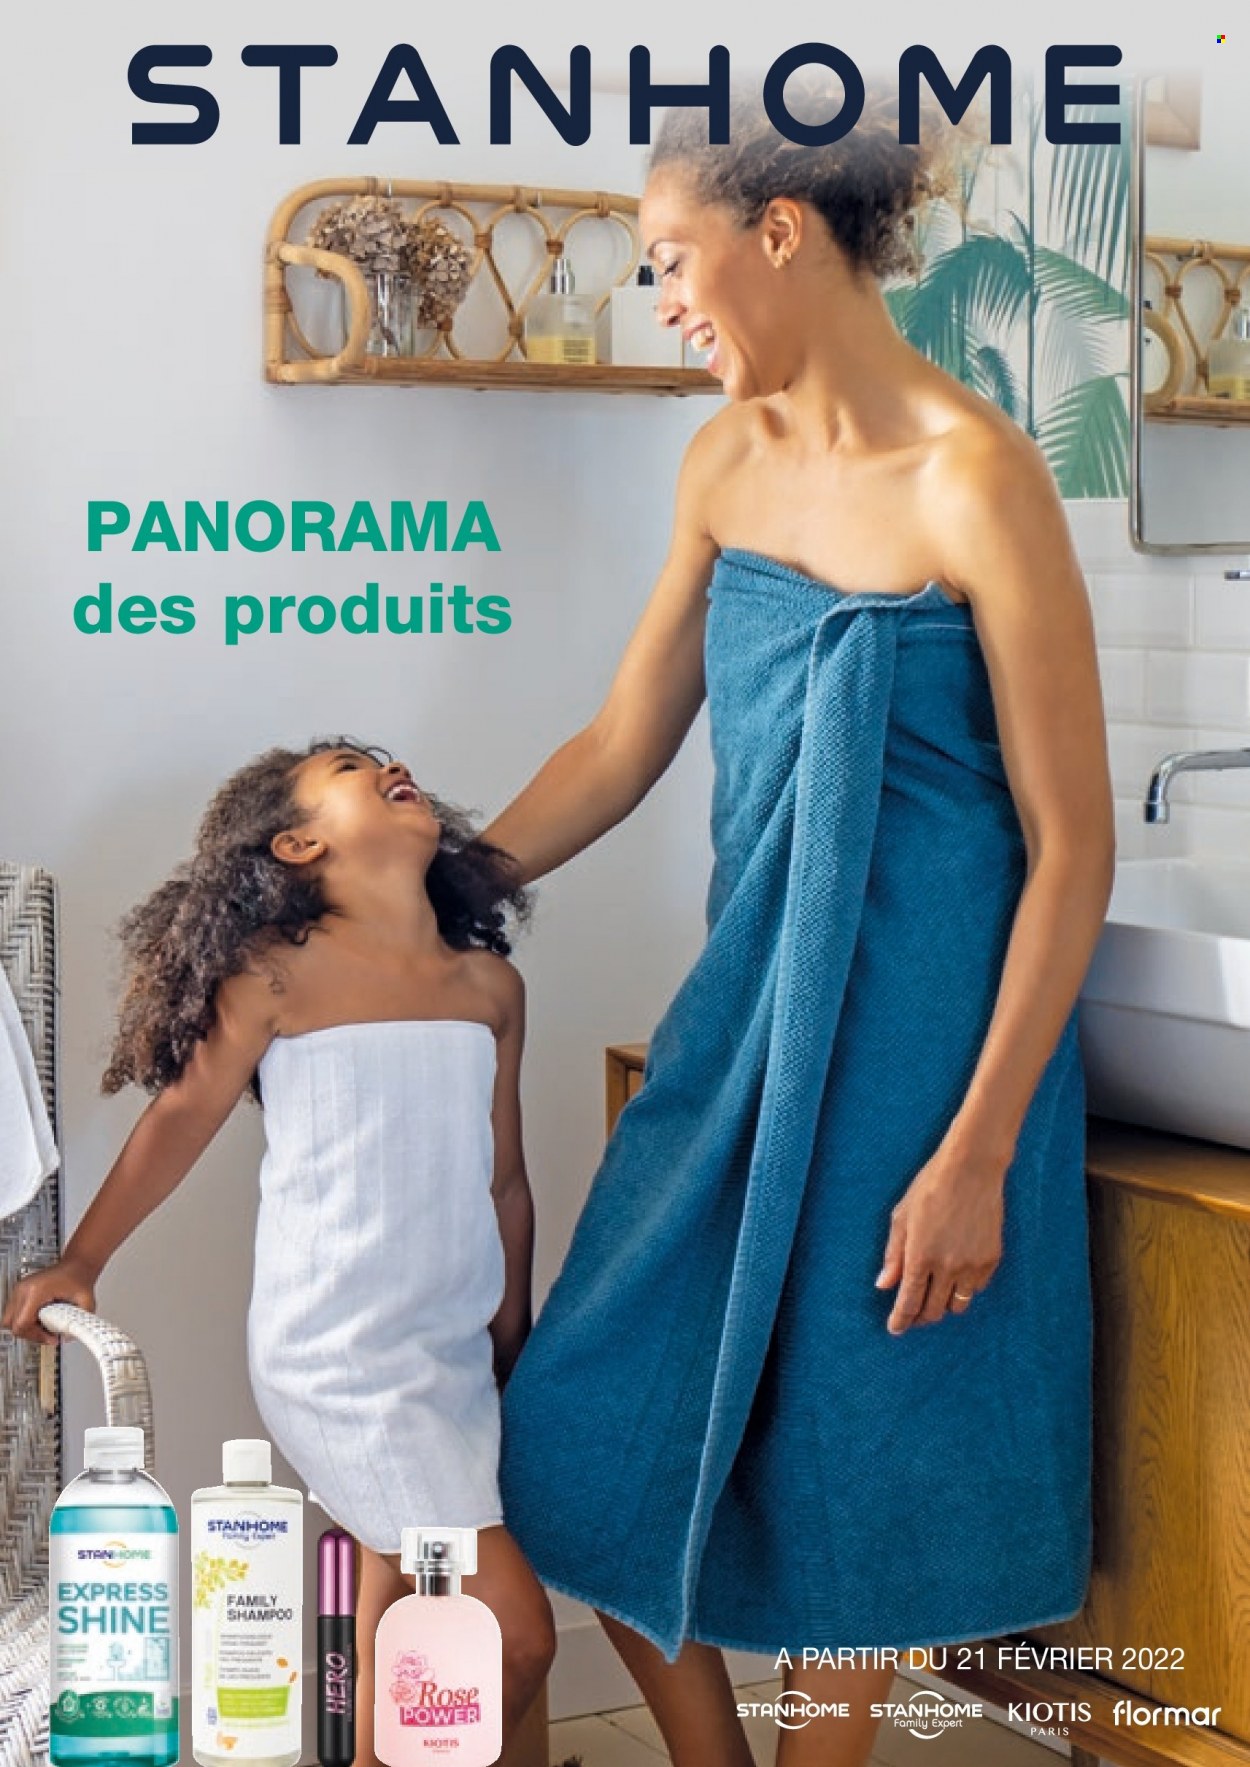 Catalogue Stanhome - Produits soldés - shampooing. Page 1.